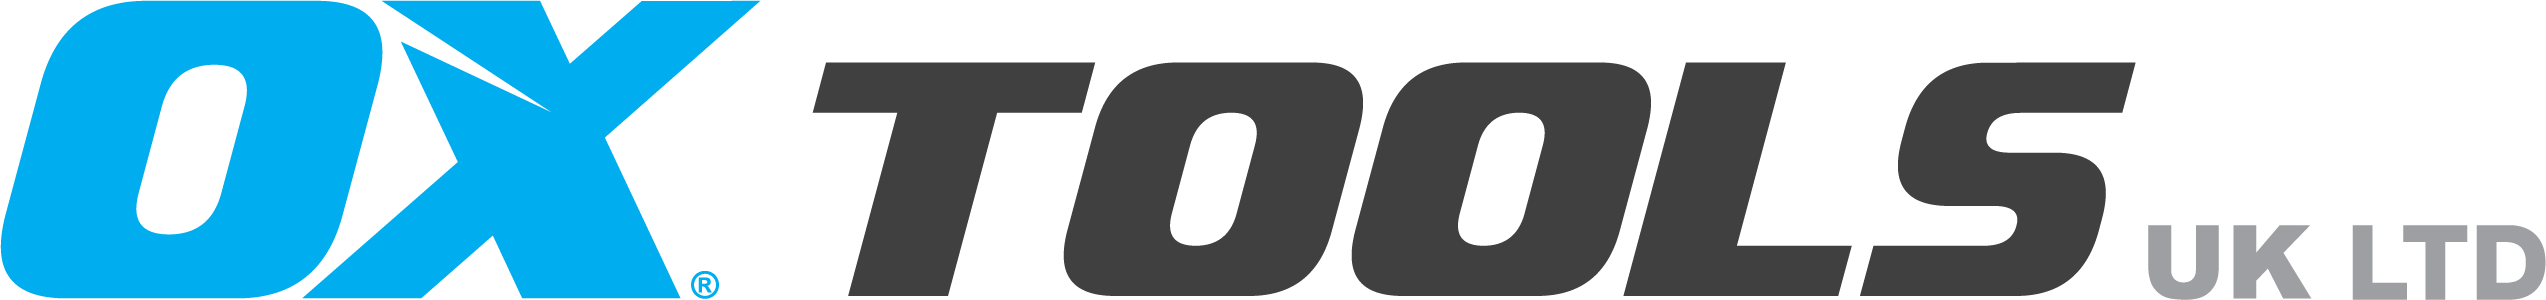 OX Tools UK LTD logo